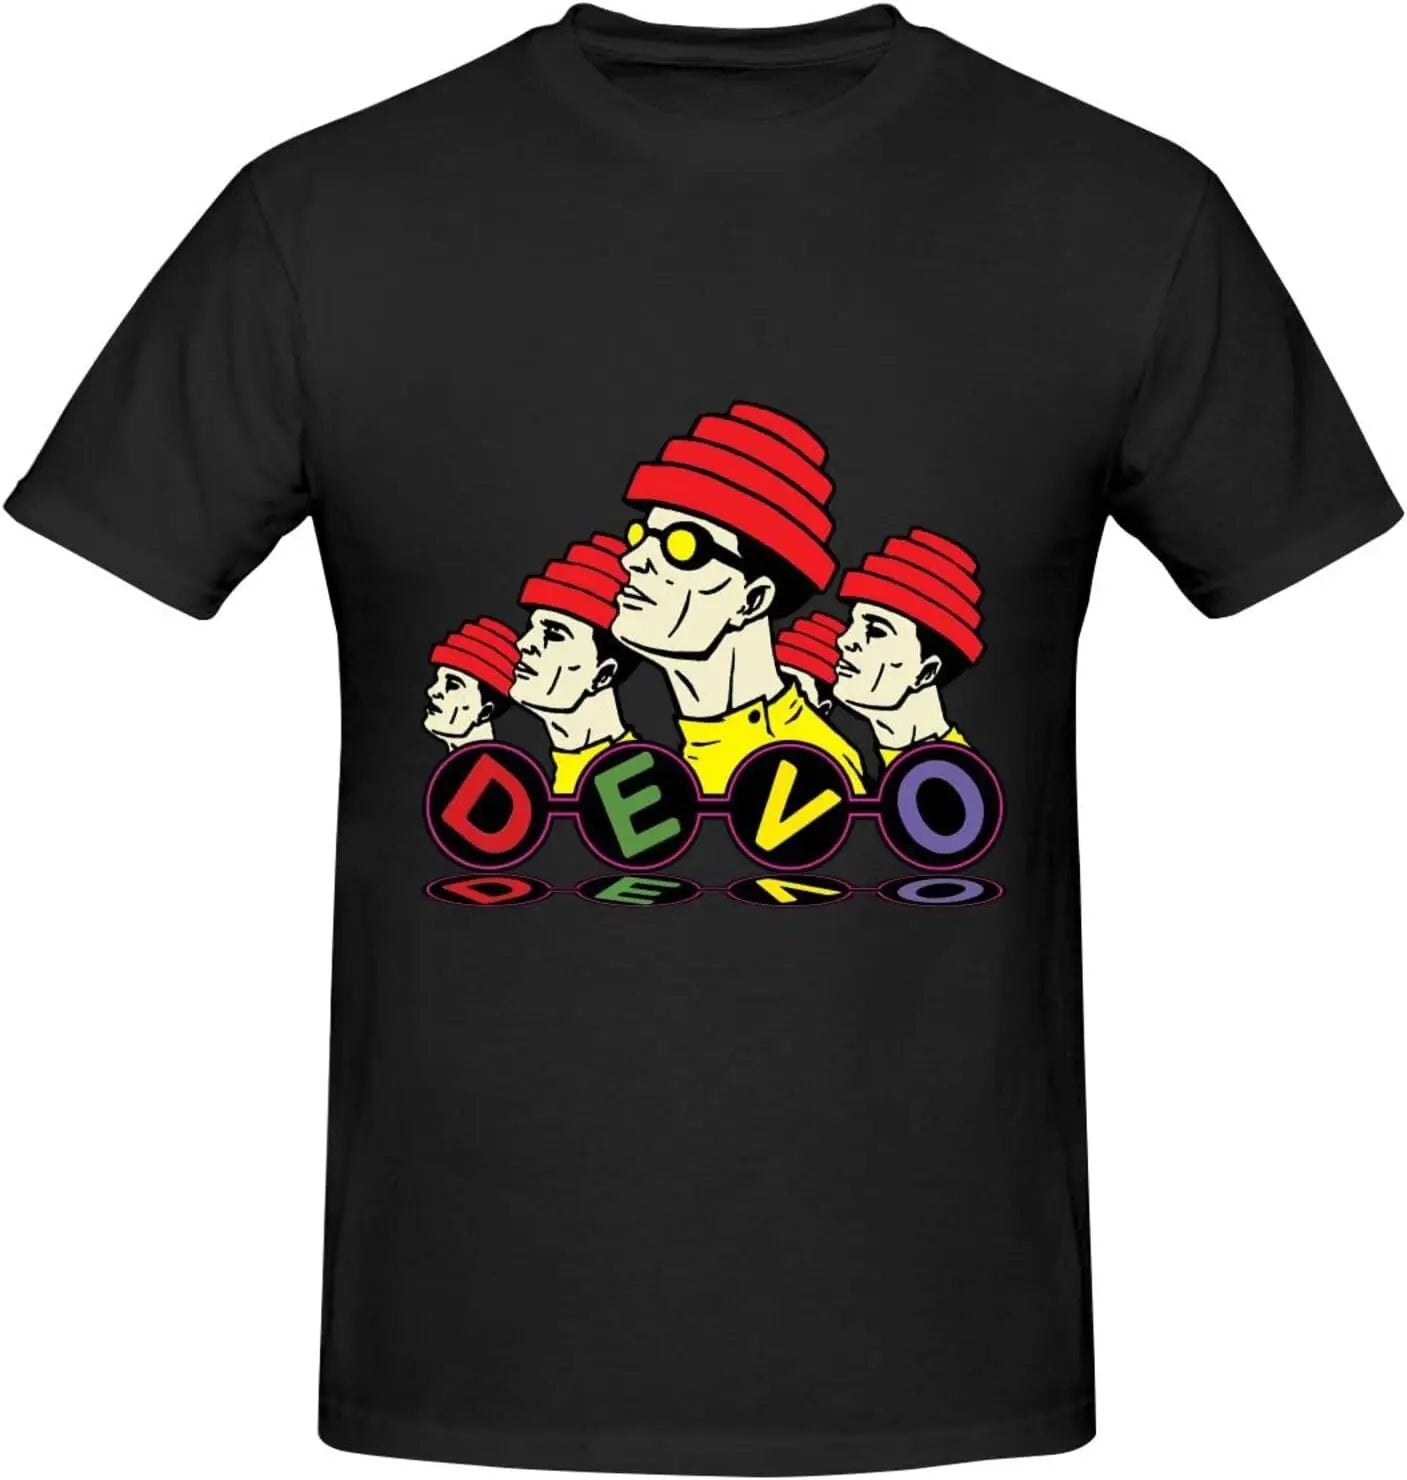 Devo Electronic New Wave Punk Rock Music Band Men's T-Shirt Basic Short Sleeve Tee Classic 80s Casual Top - Lizard Vigilante